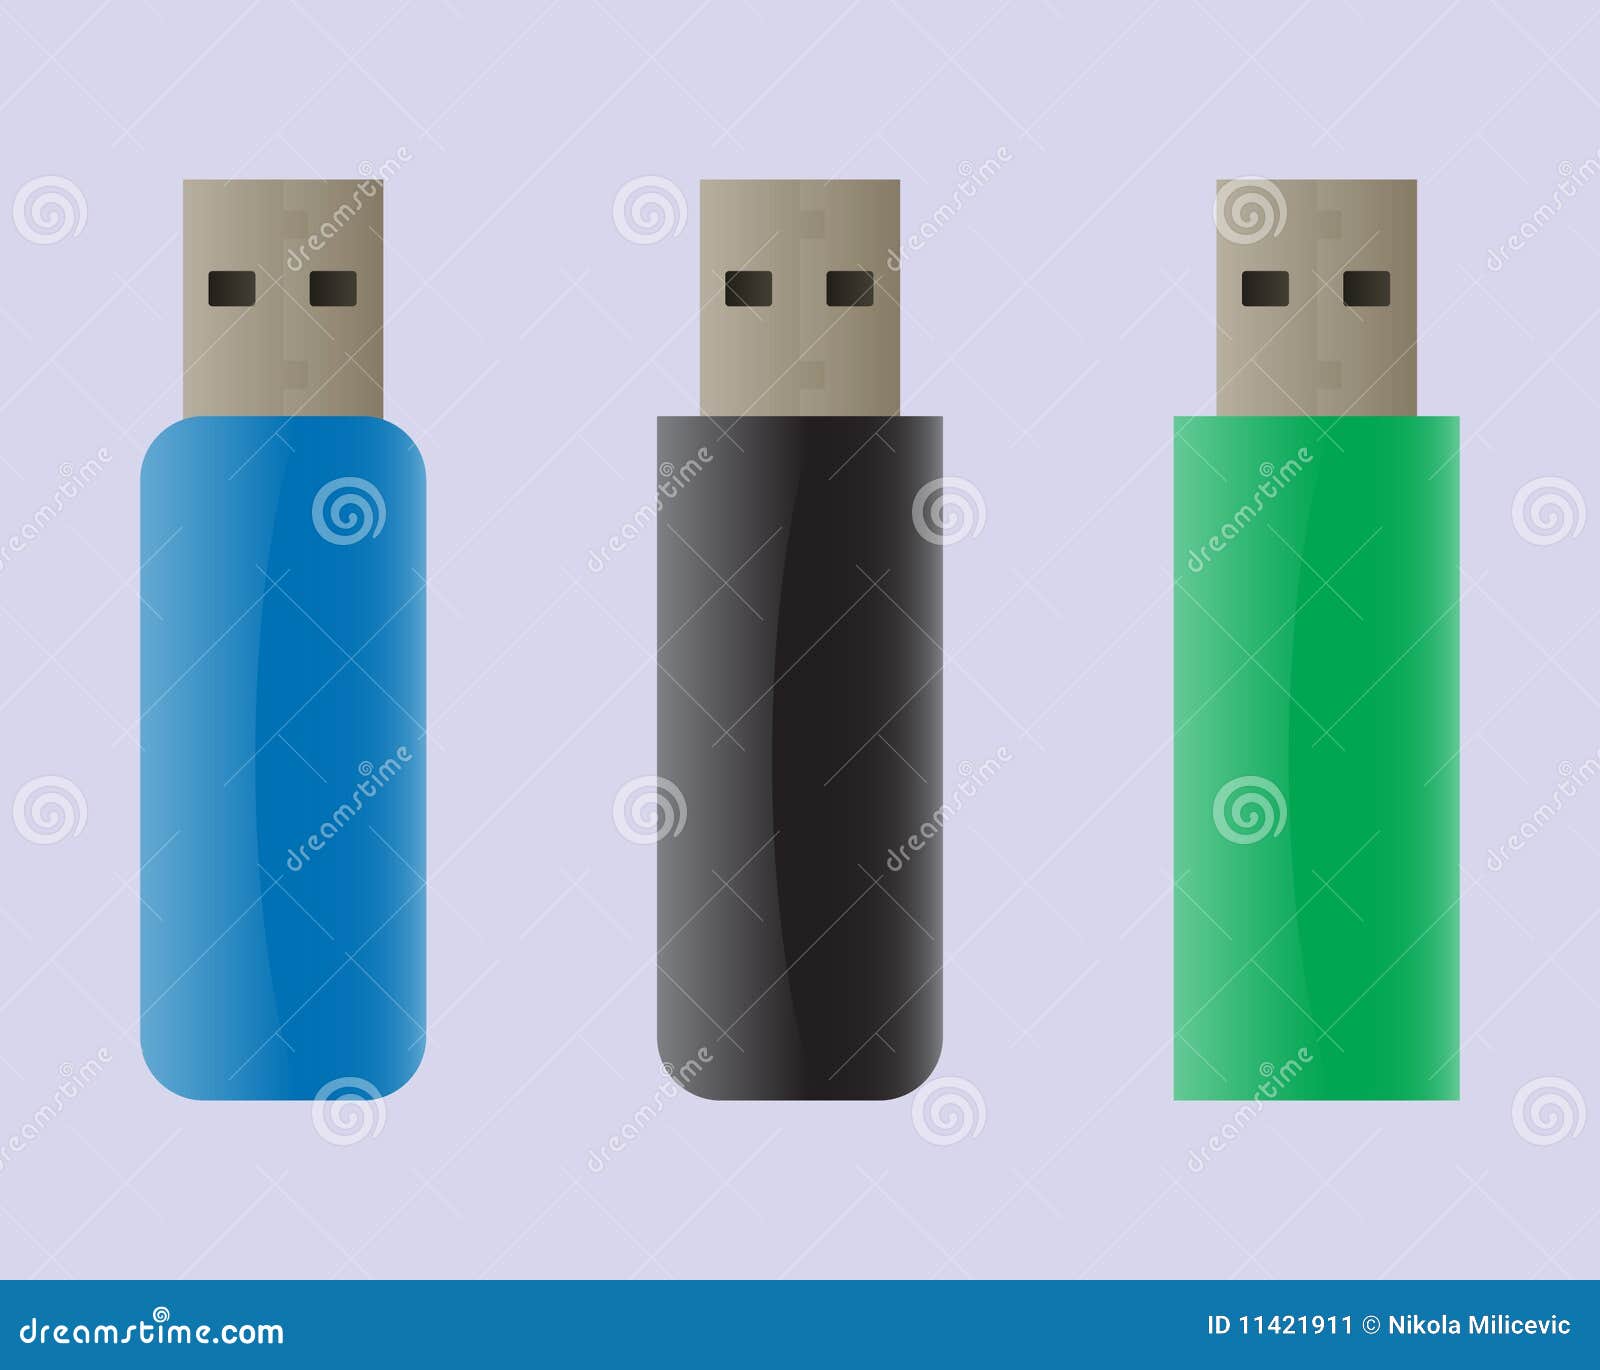 USB flash drives. Illustration of 3 various USB keys